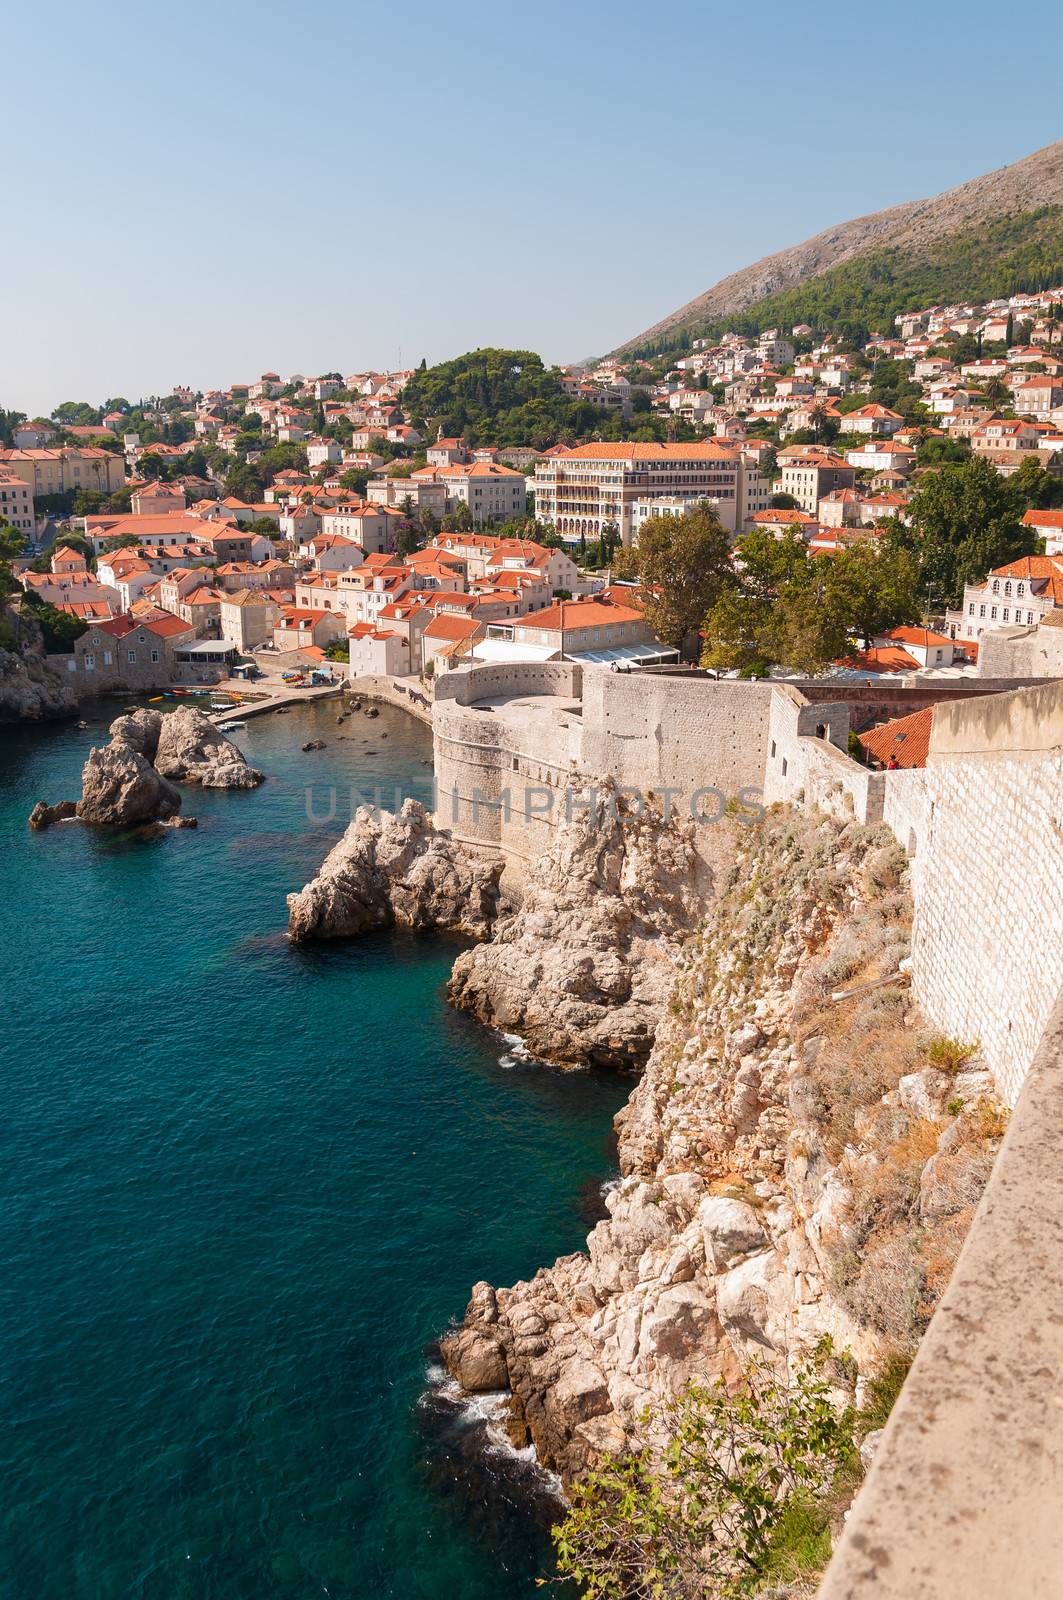 City walls of Dubrovnik Old City in Croatia.